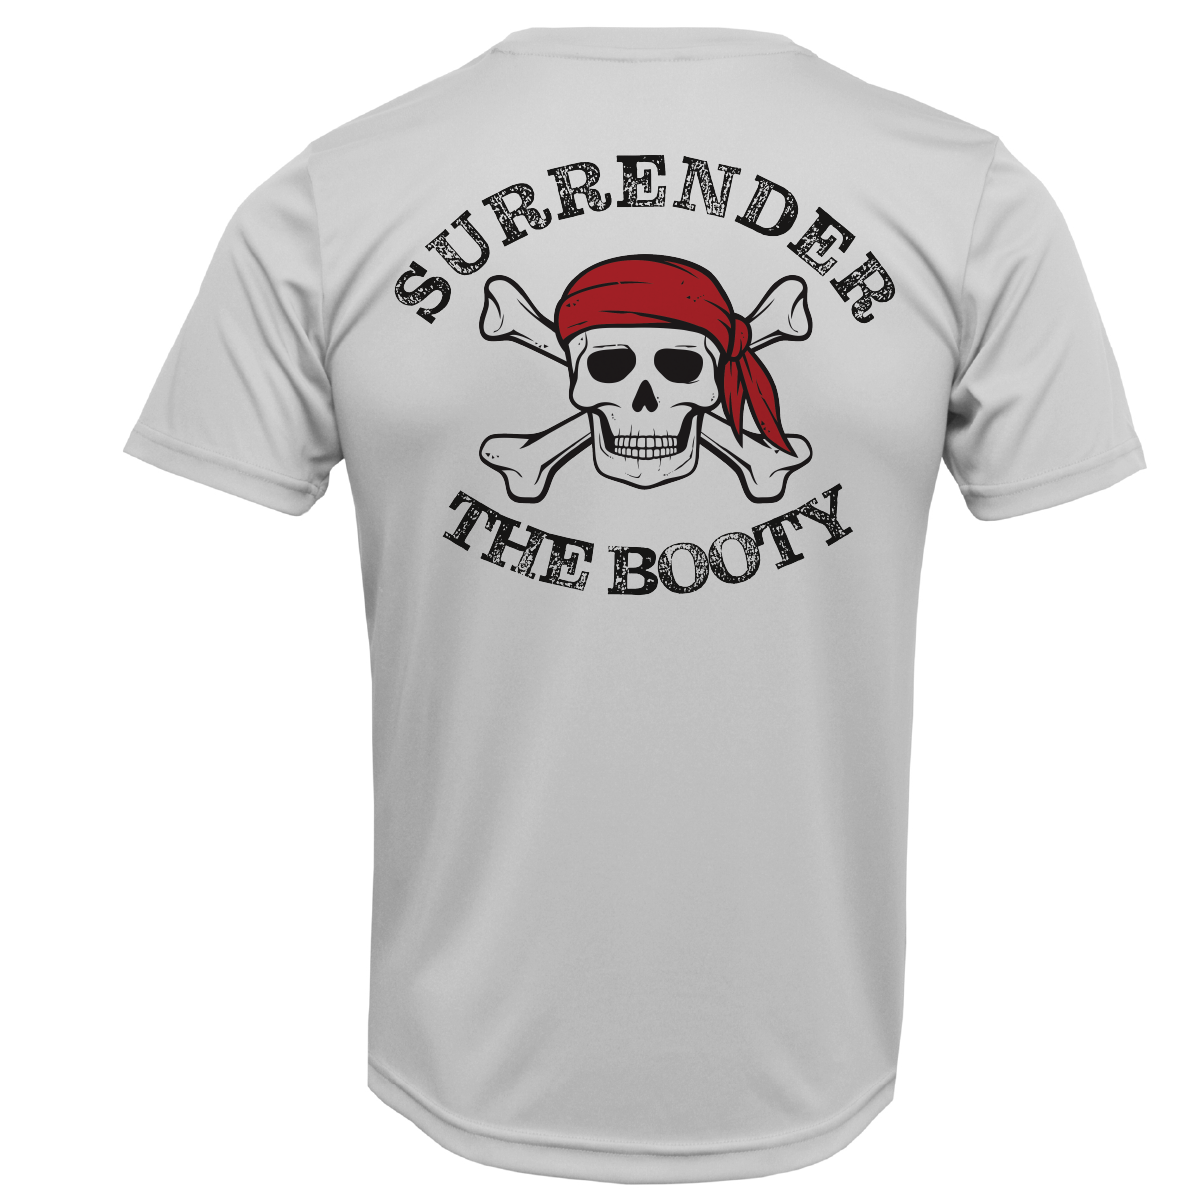 St. Pete Beach, FL "Surrender The Booty" Men's Short Sleeve UPF 50+ Dry-Fit Shirt